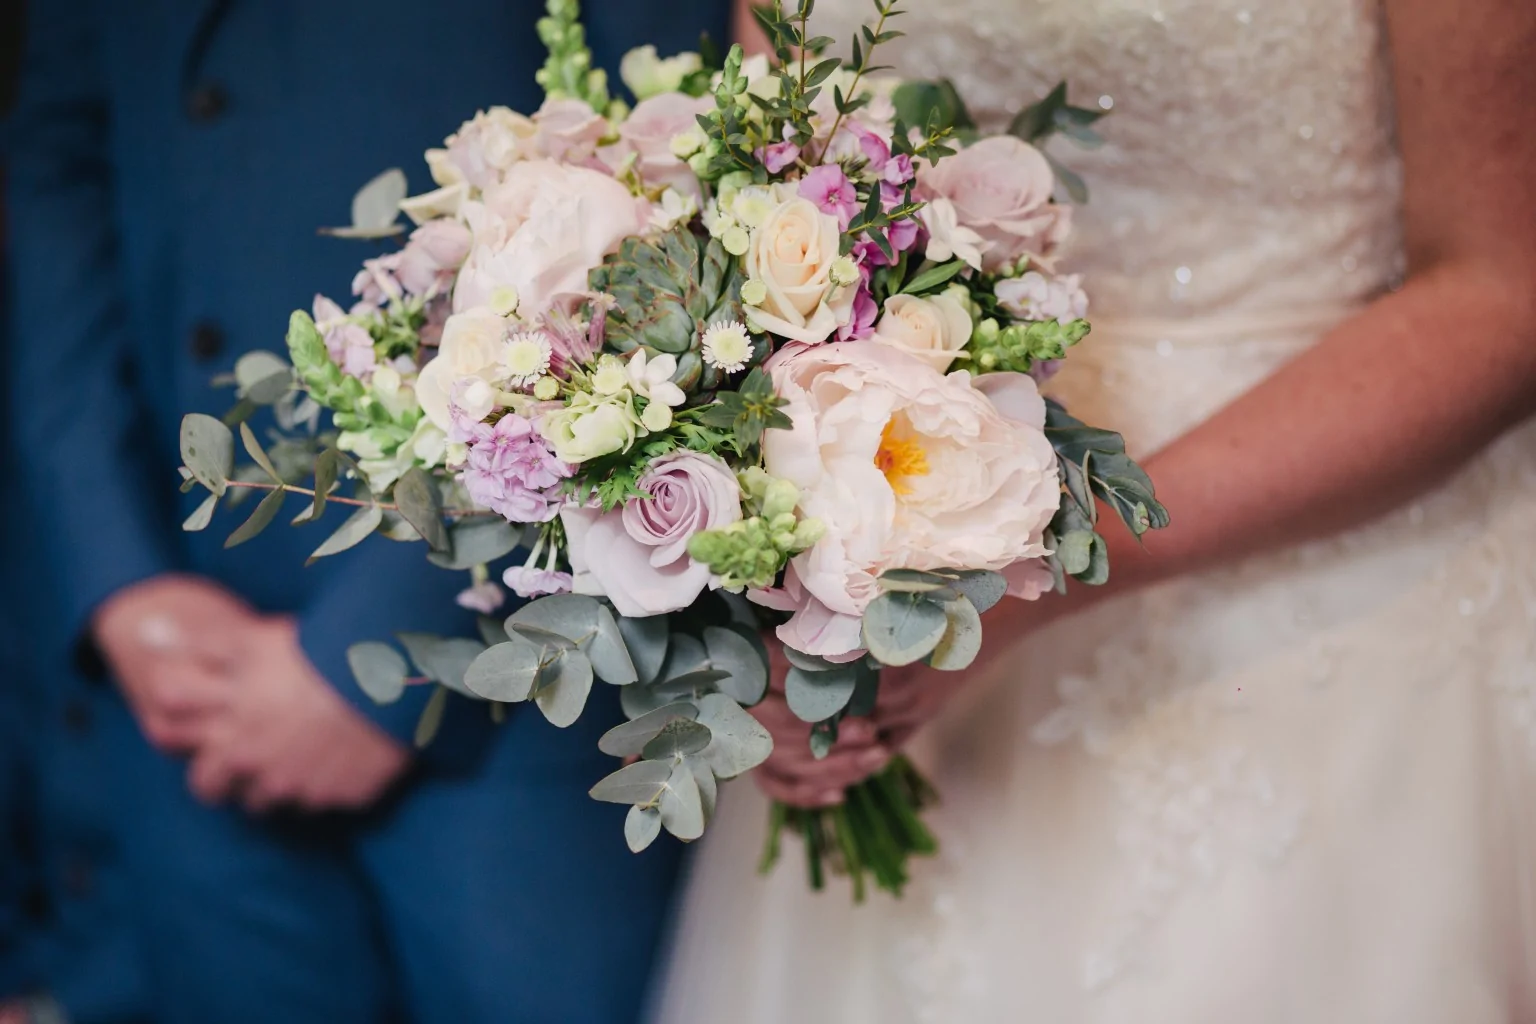 Couple holding wedding bouquet